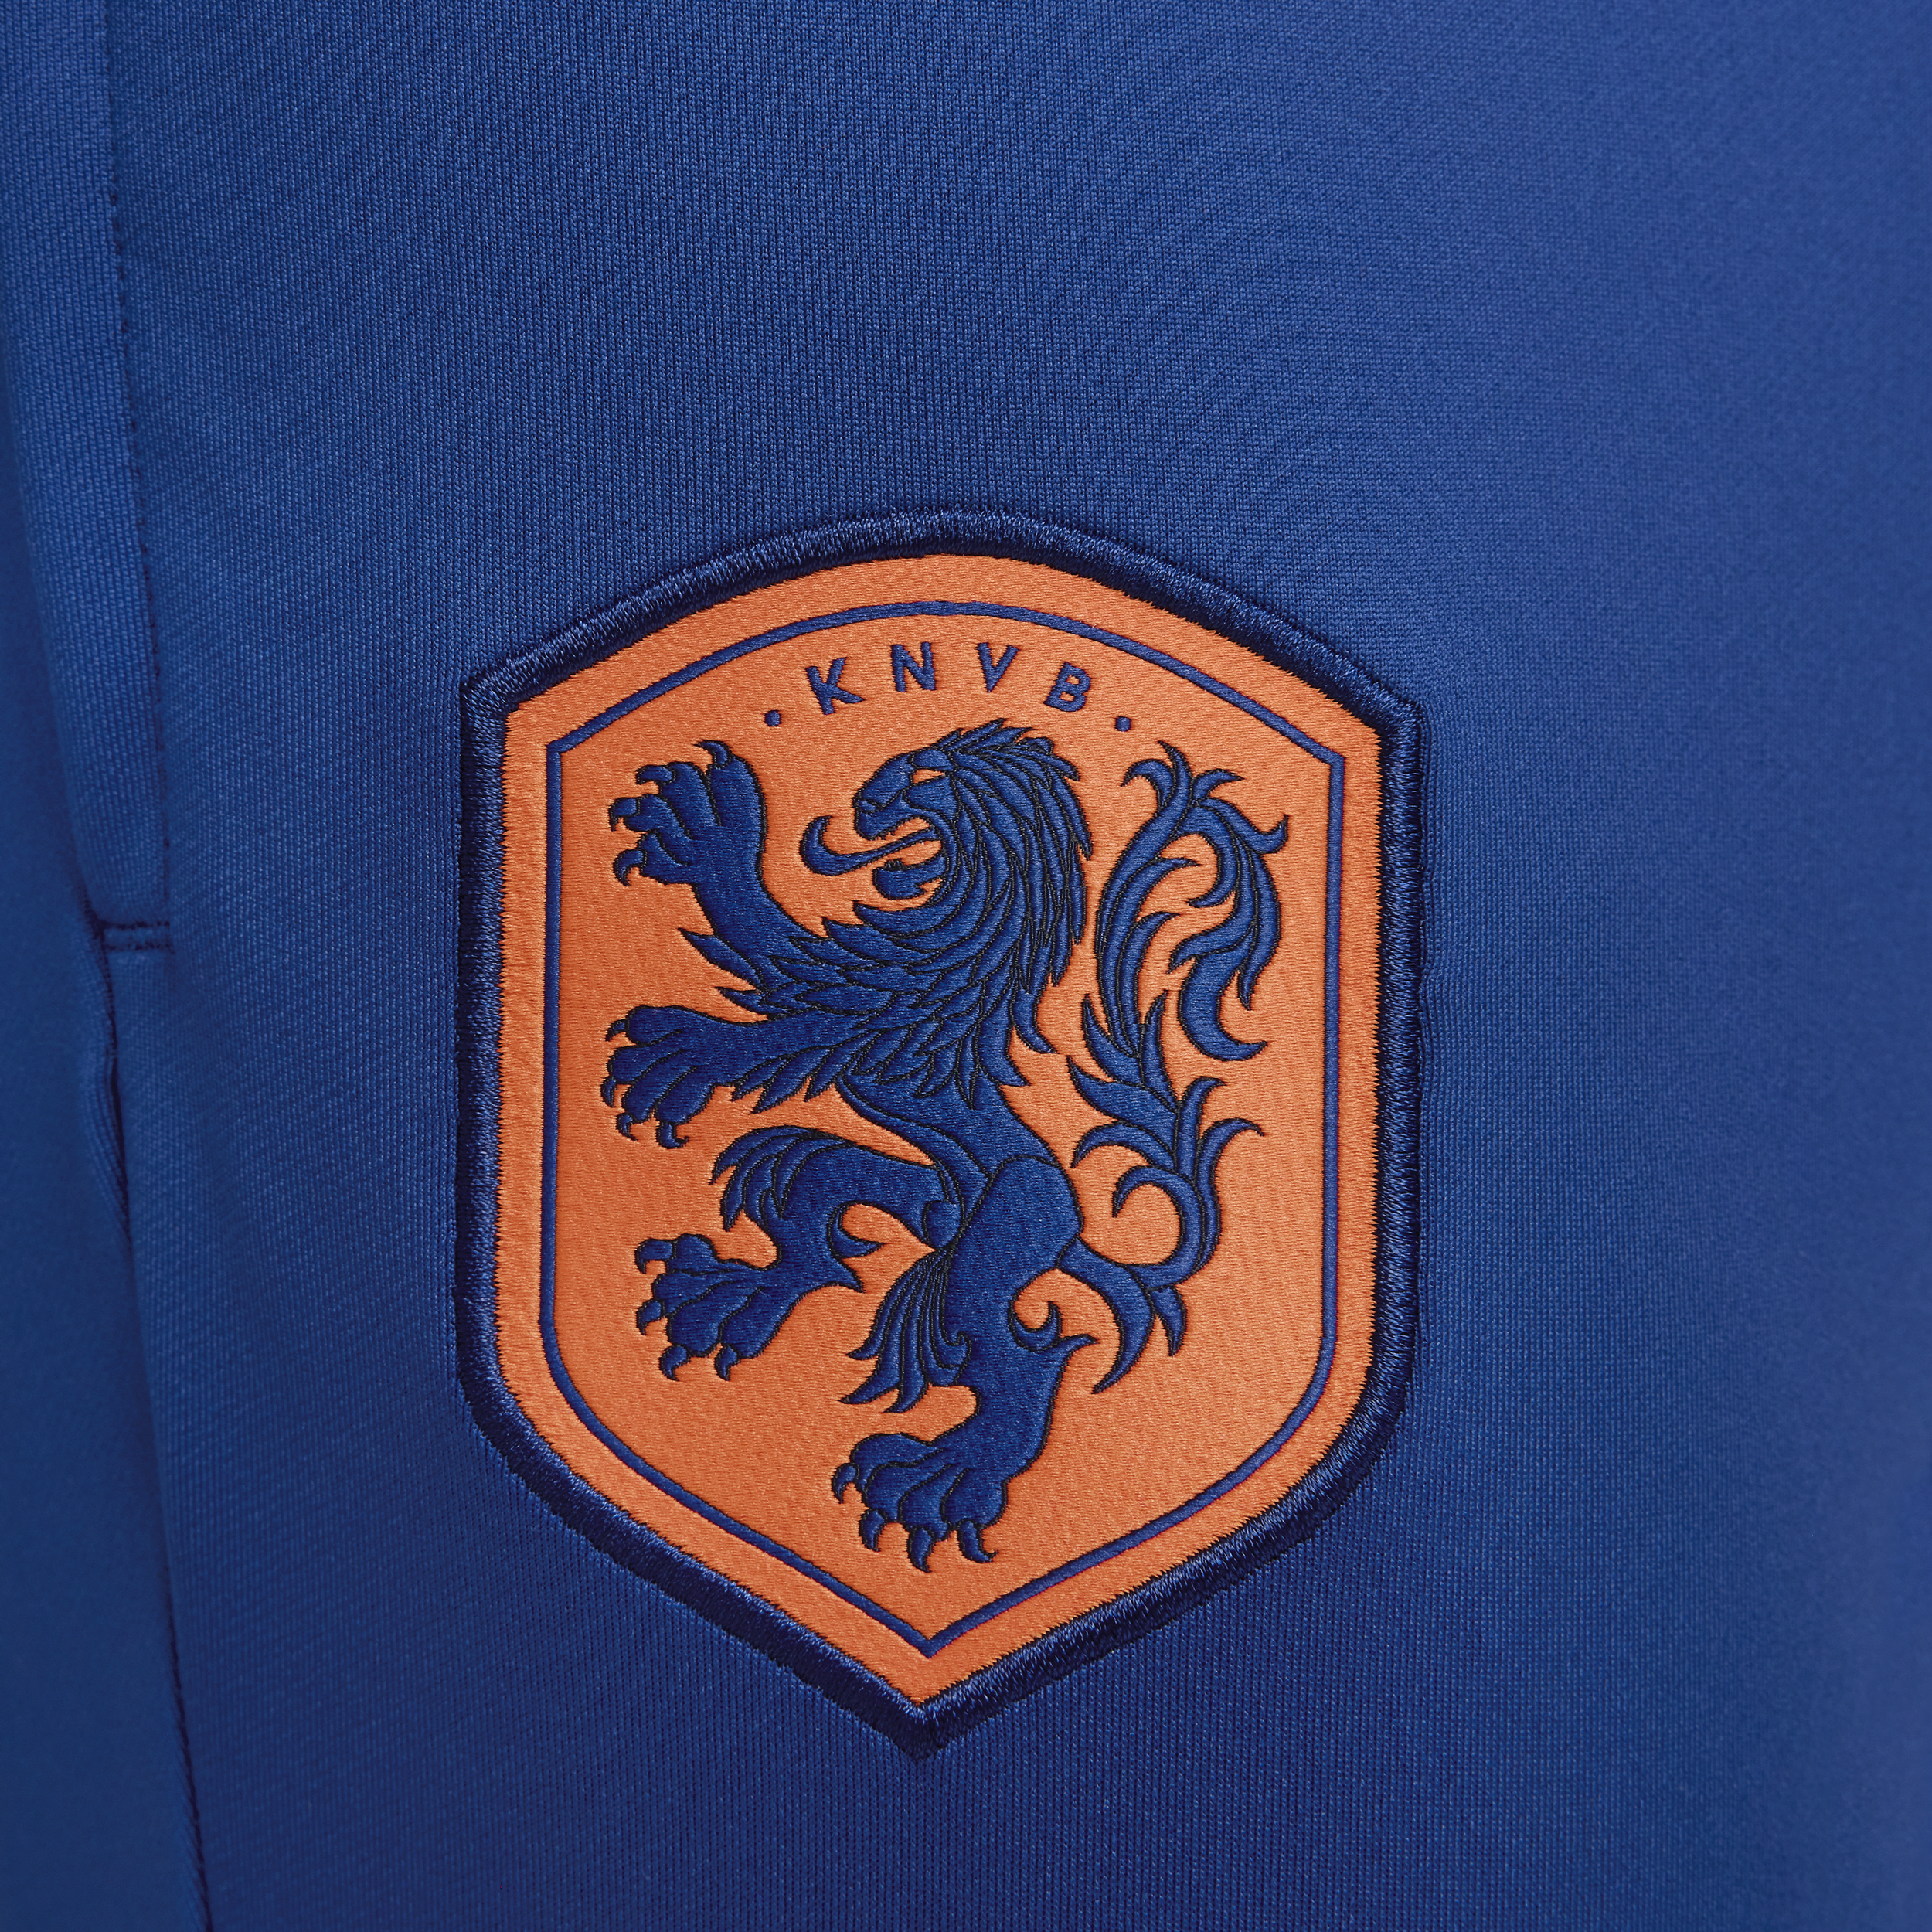 Nike Nederland Strike Dri-FIT knit voetbalbroek voor heren Blauw